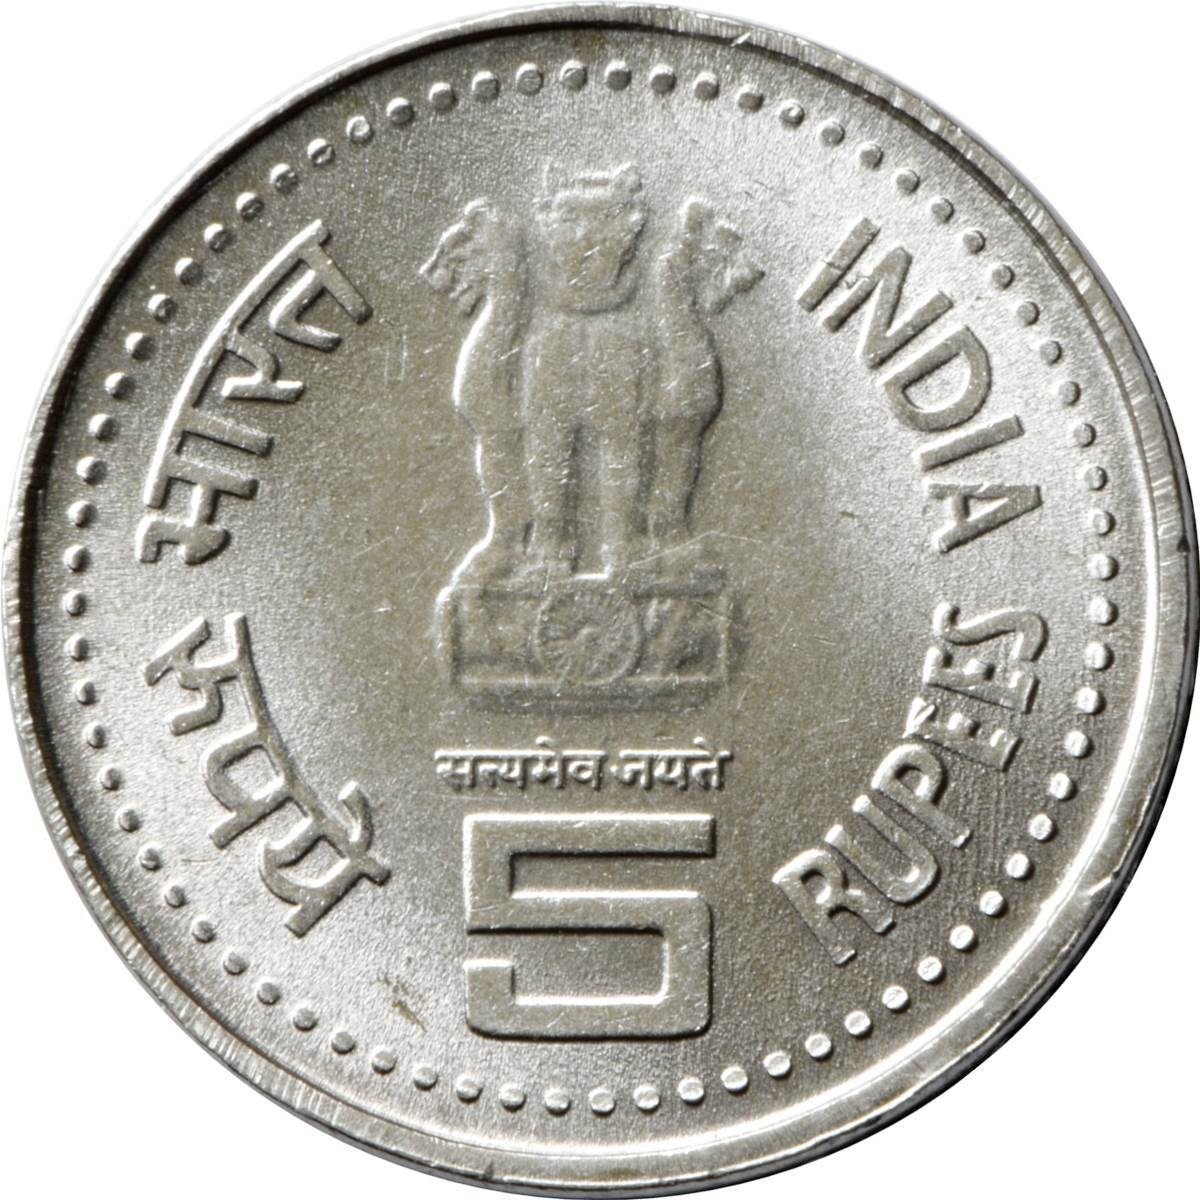 5 Rupee Coin Clipart.